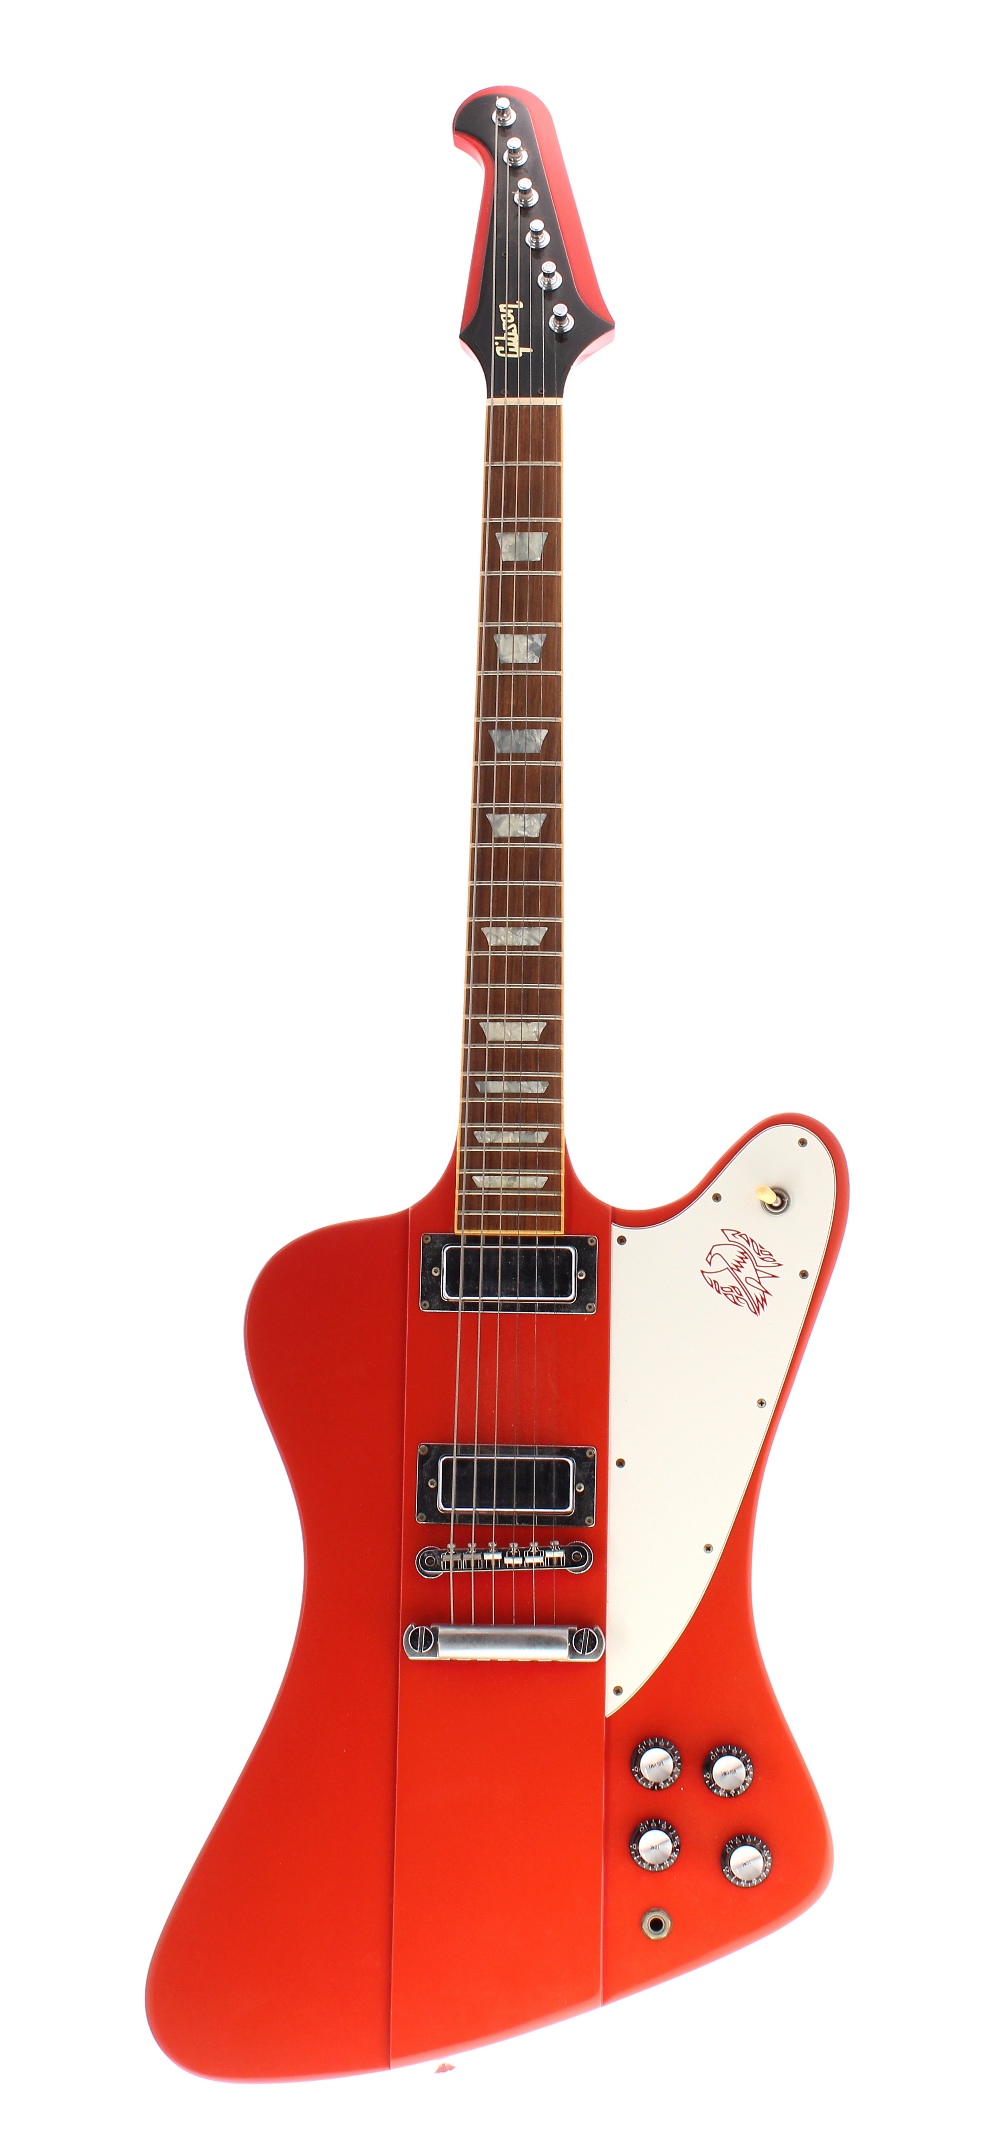 1990 Gibson Firebird V electric guitar, made in USA, ser. no. 9xxx0xx4; Finish: cardinal red, some